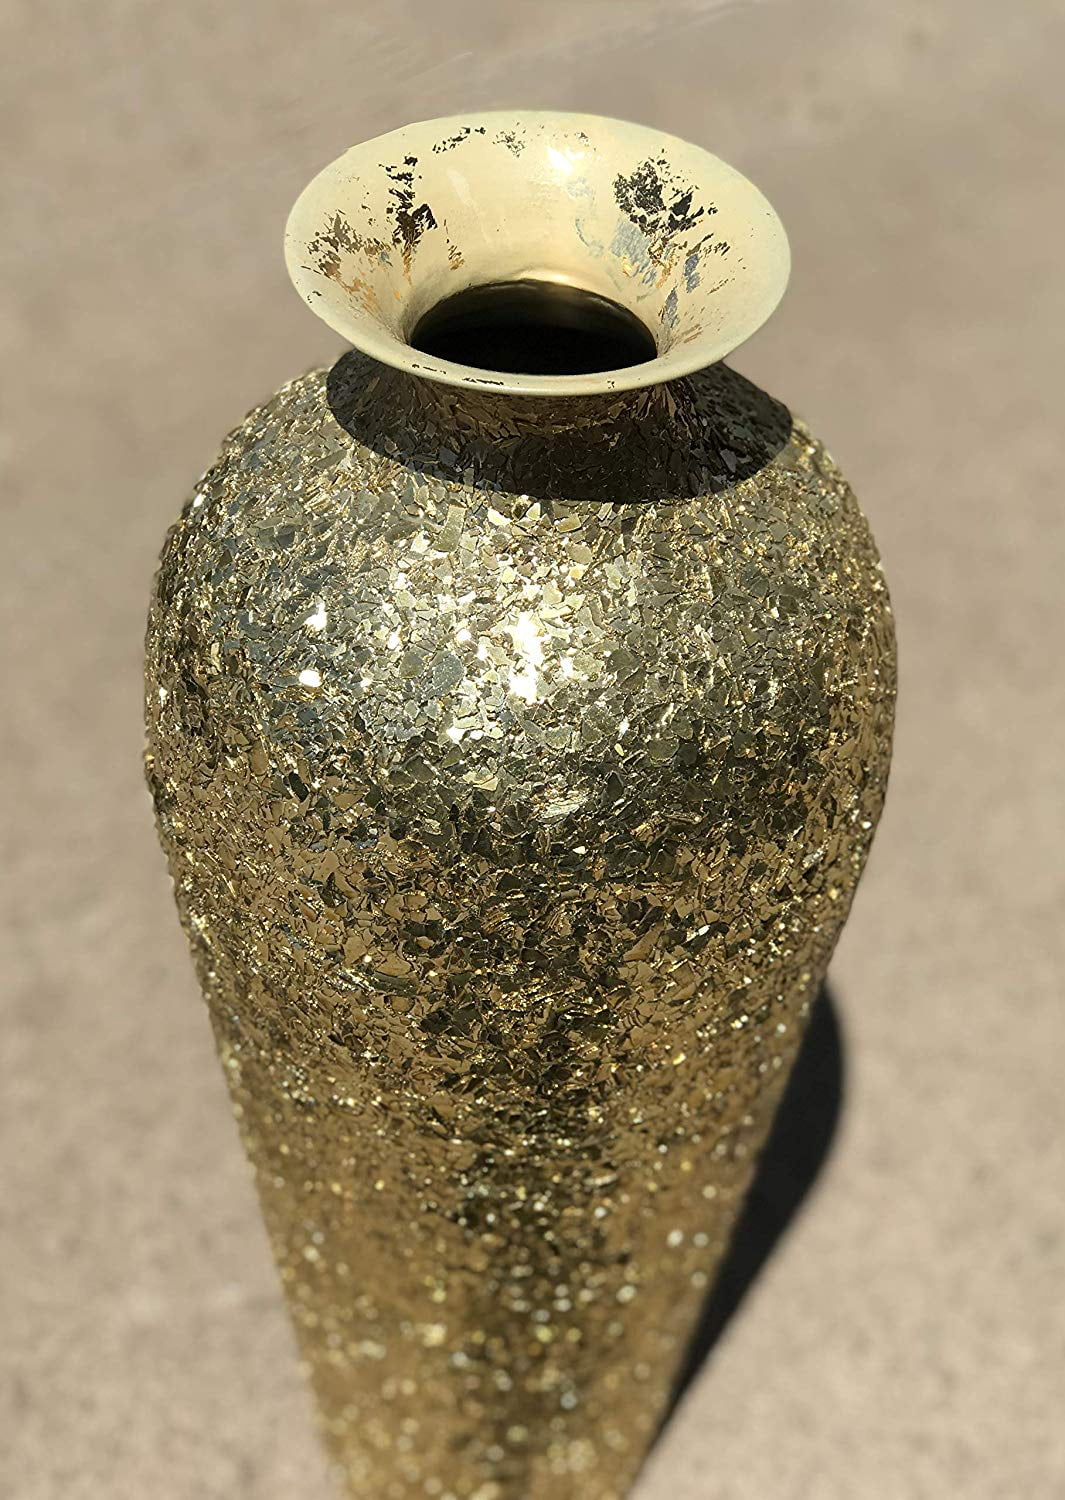 Iridescent Ball Glass Flower Vase- CharmyDecor